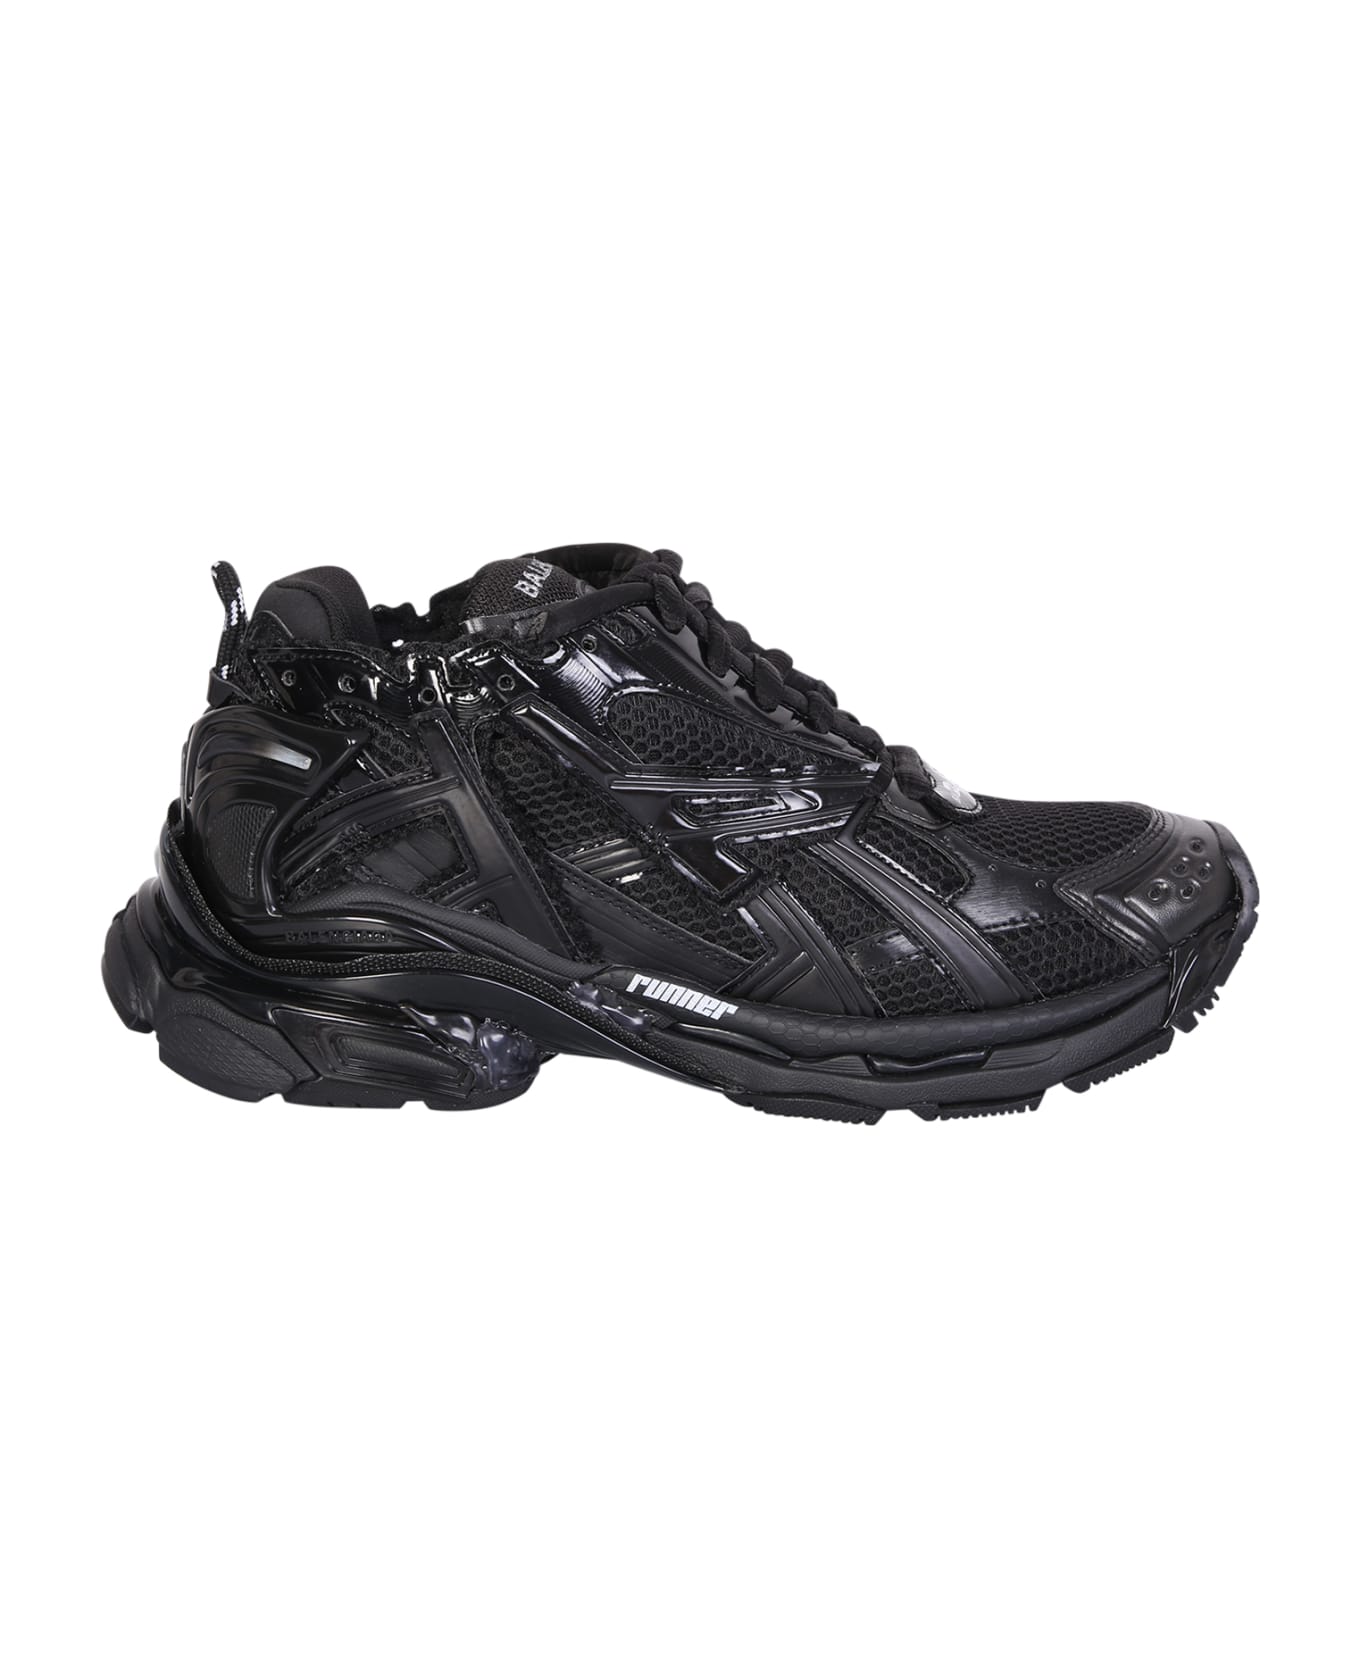 Balenciaga Runner Sneakers Black - Black スニーカー